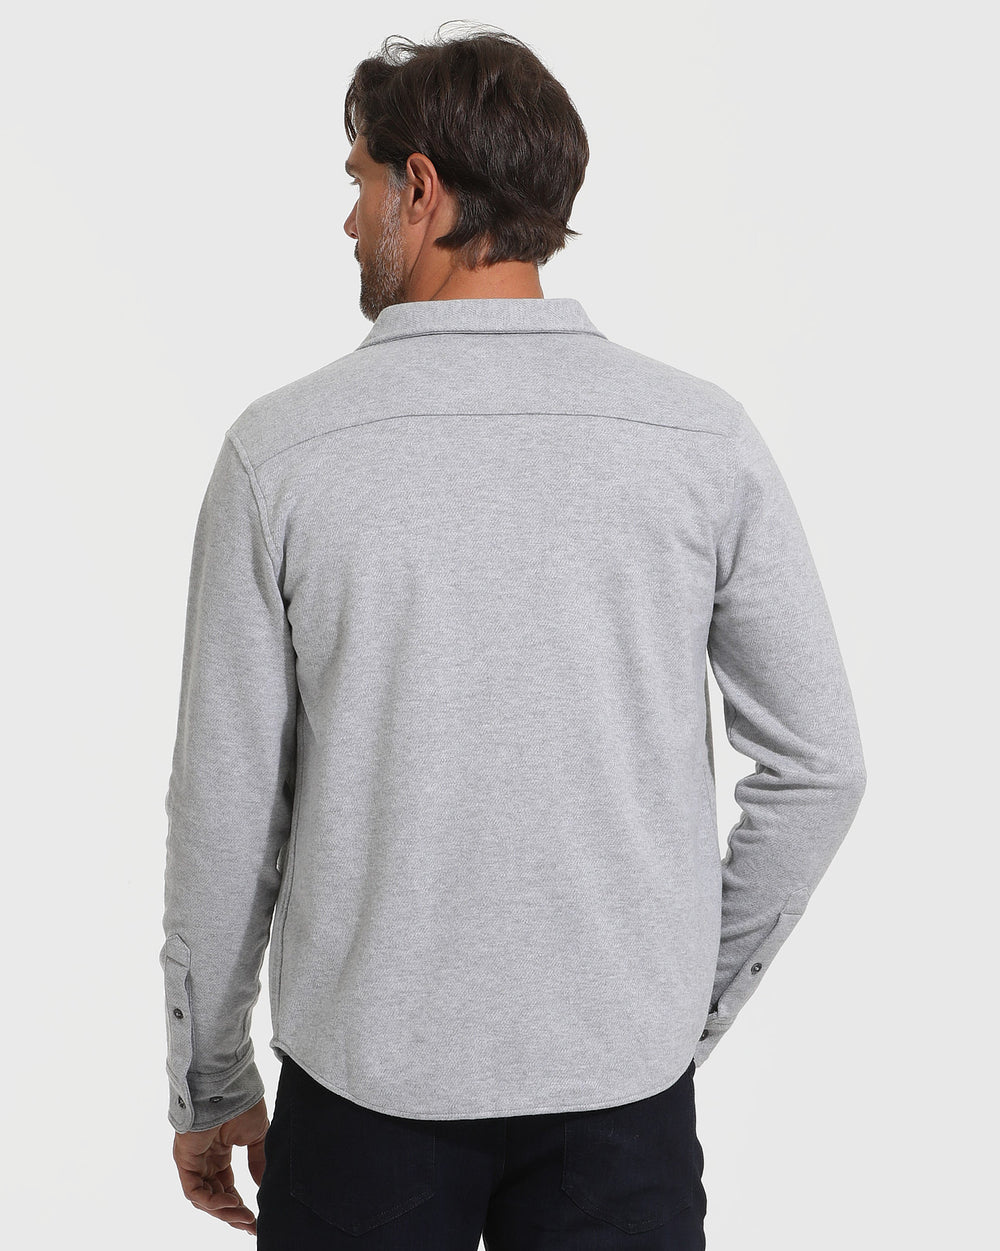 Heather Gray Long Sleeve Sweater Shirt